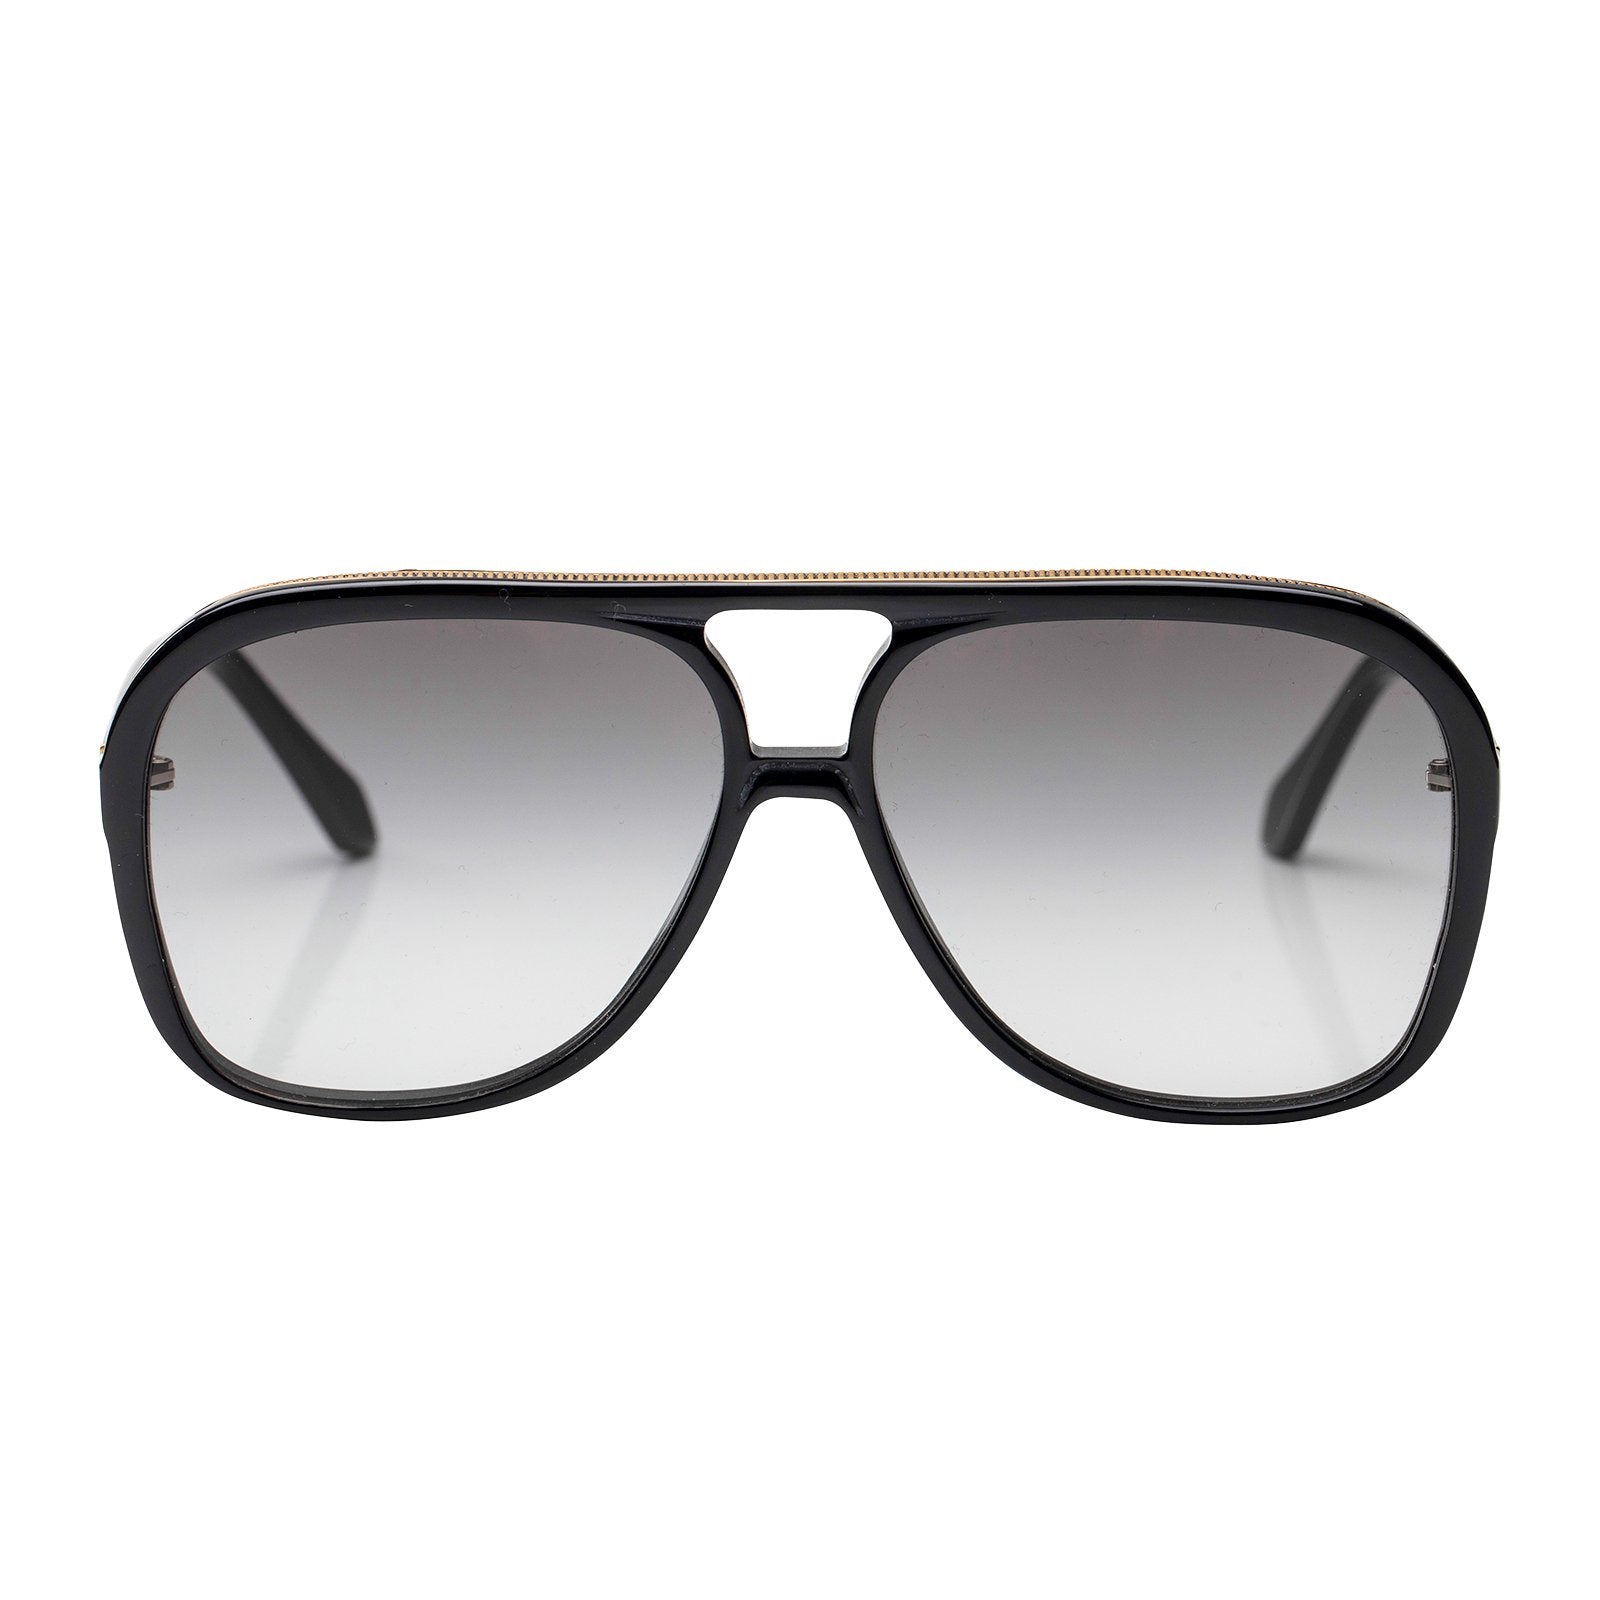 Bang | Sunglasses - Gloss Black w. Gold Metal Trim / Black Gradient Lens